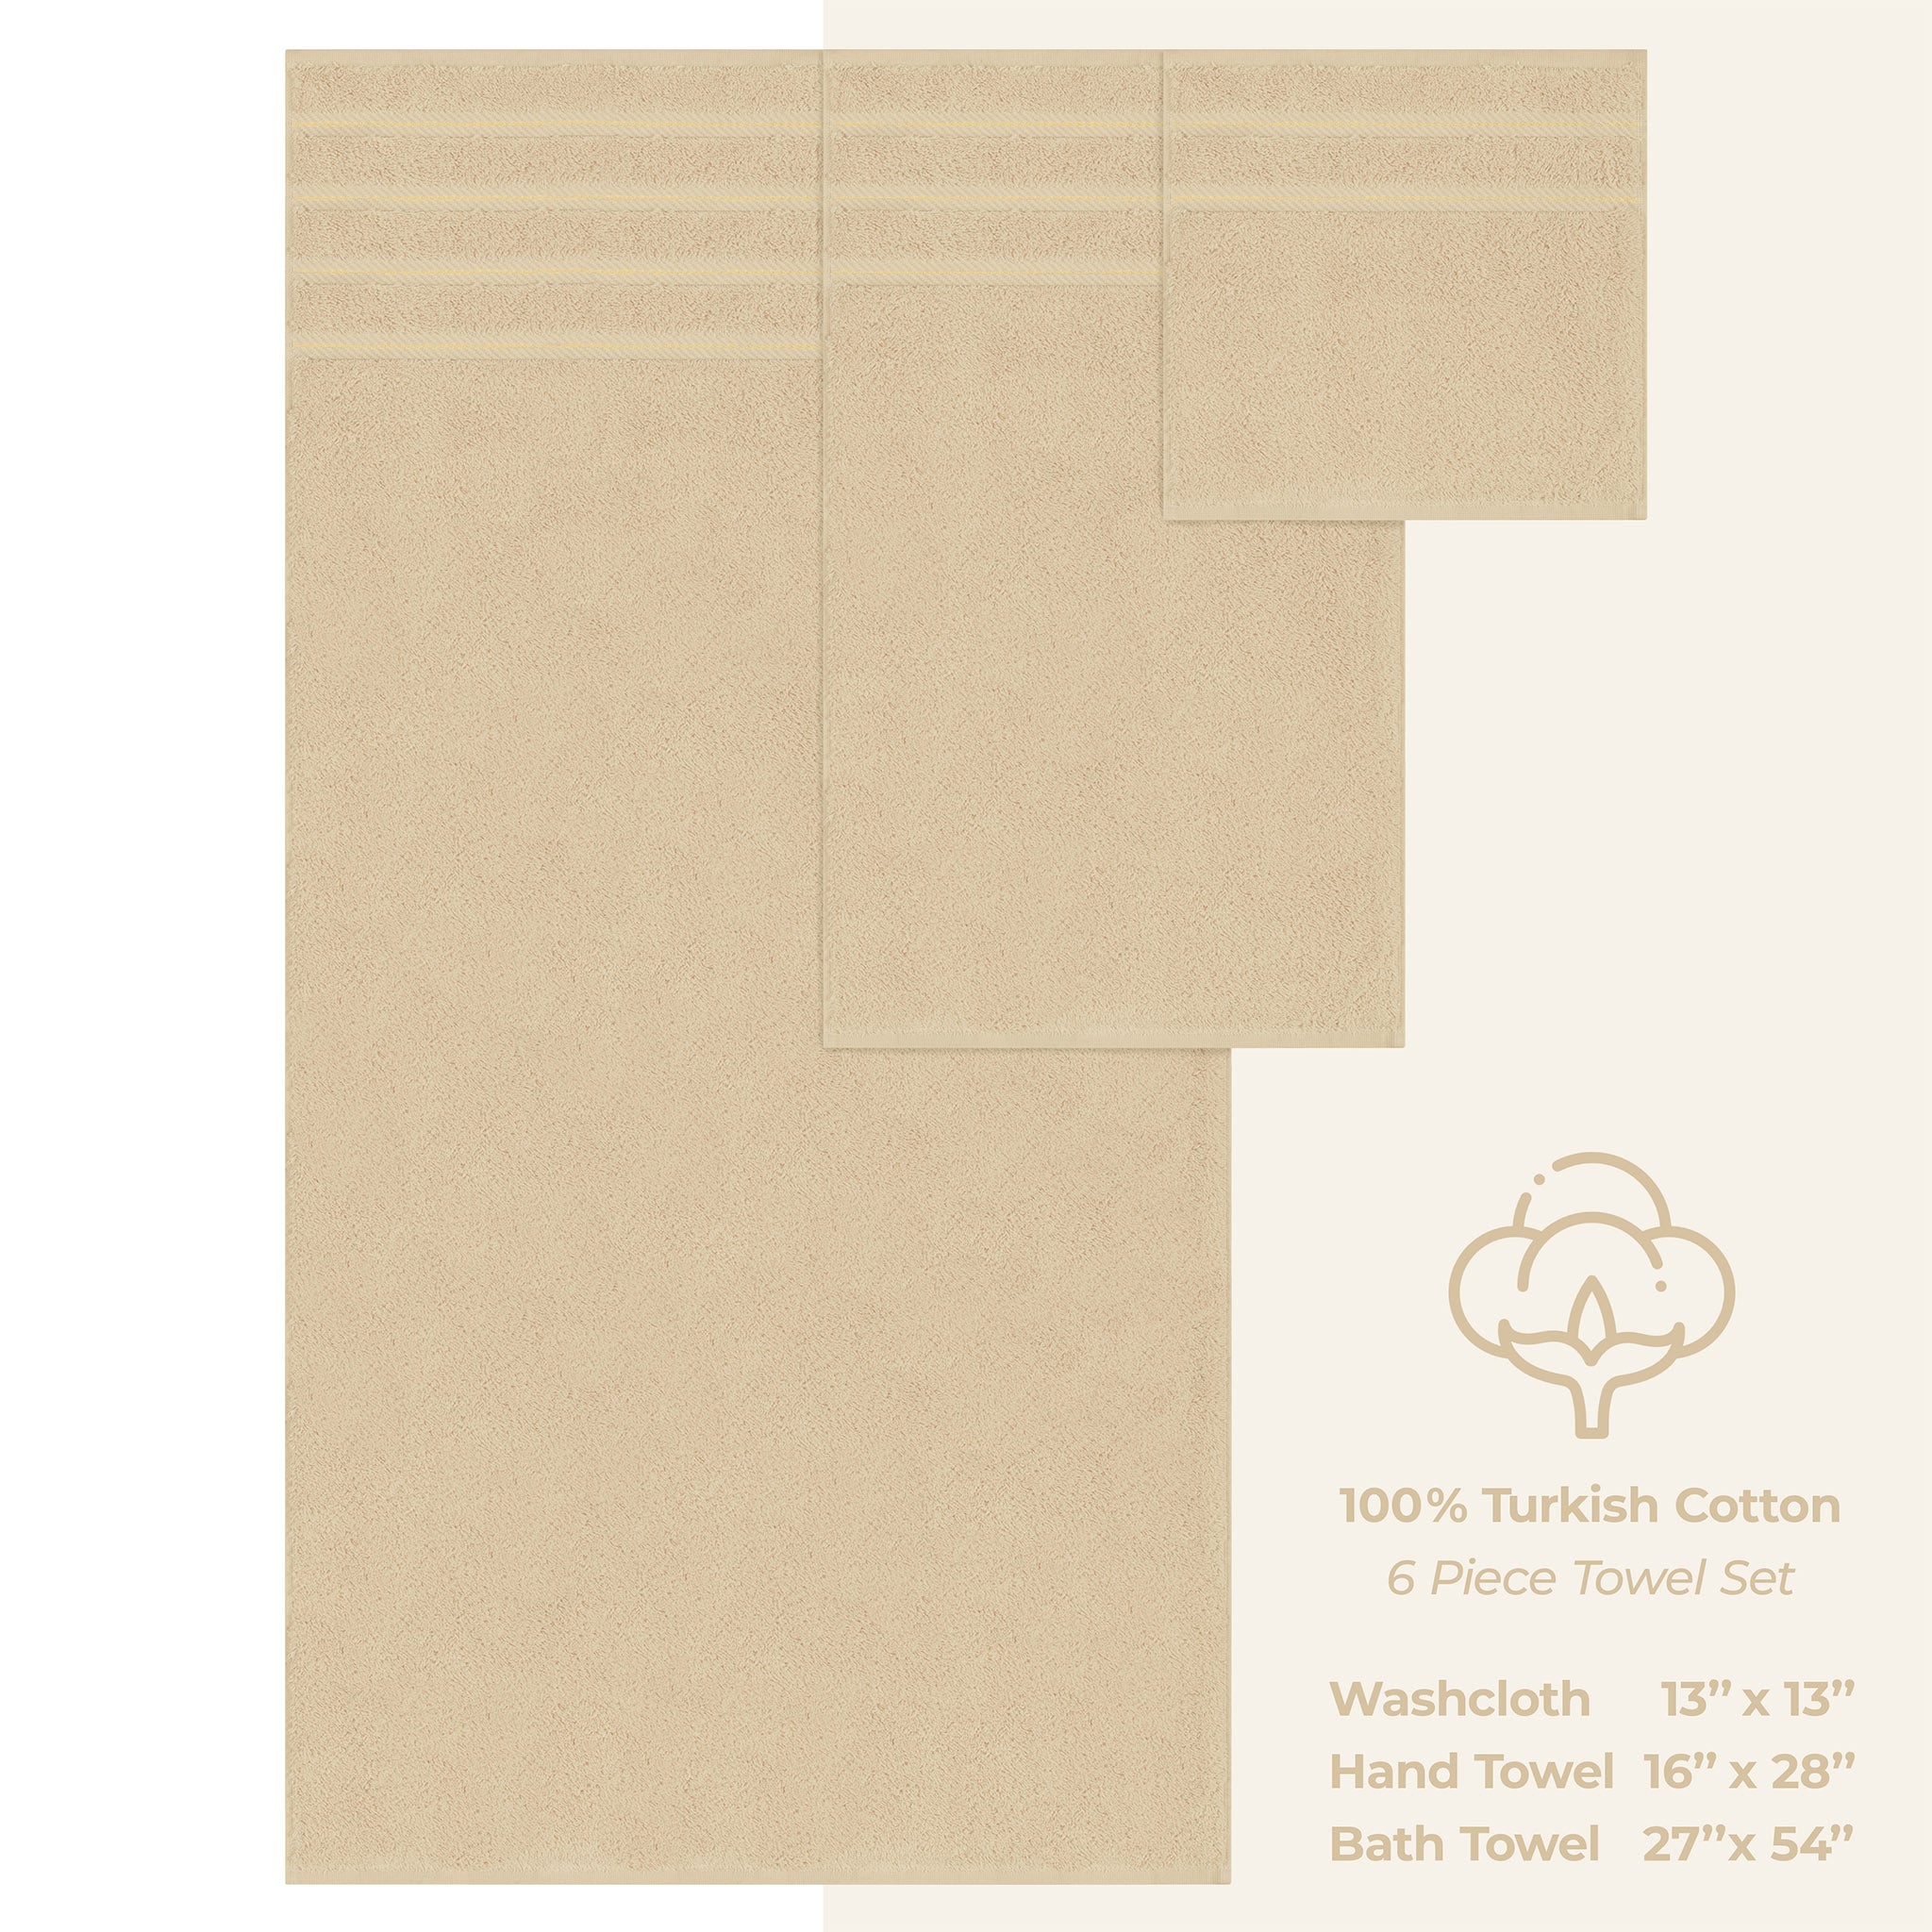 American Soft Linen 100% Turkish Cotton 6 Piece Towel Set Wholesale sand-taupe-4